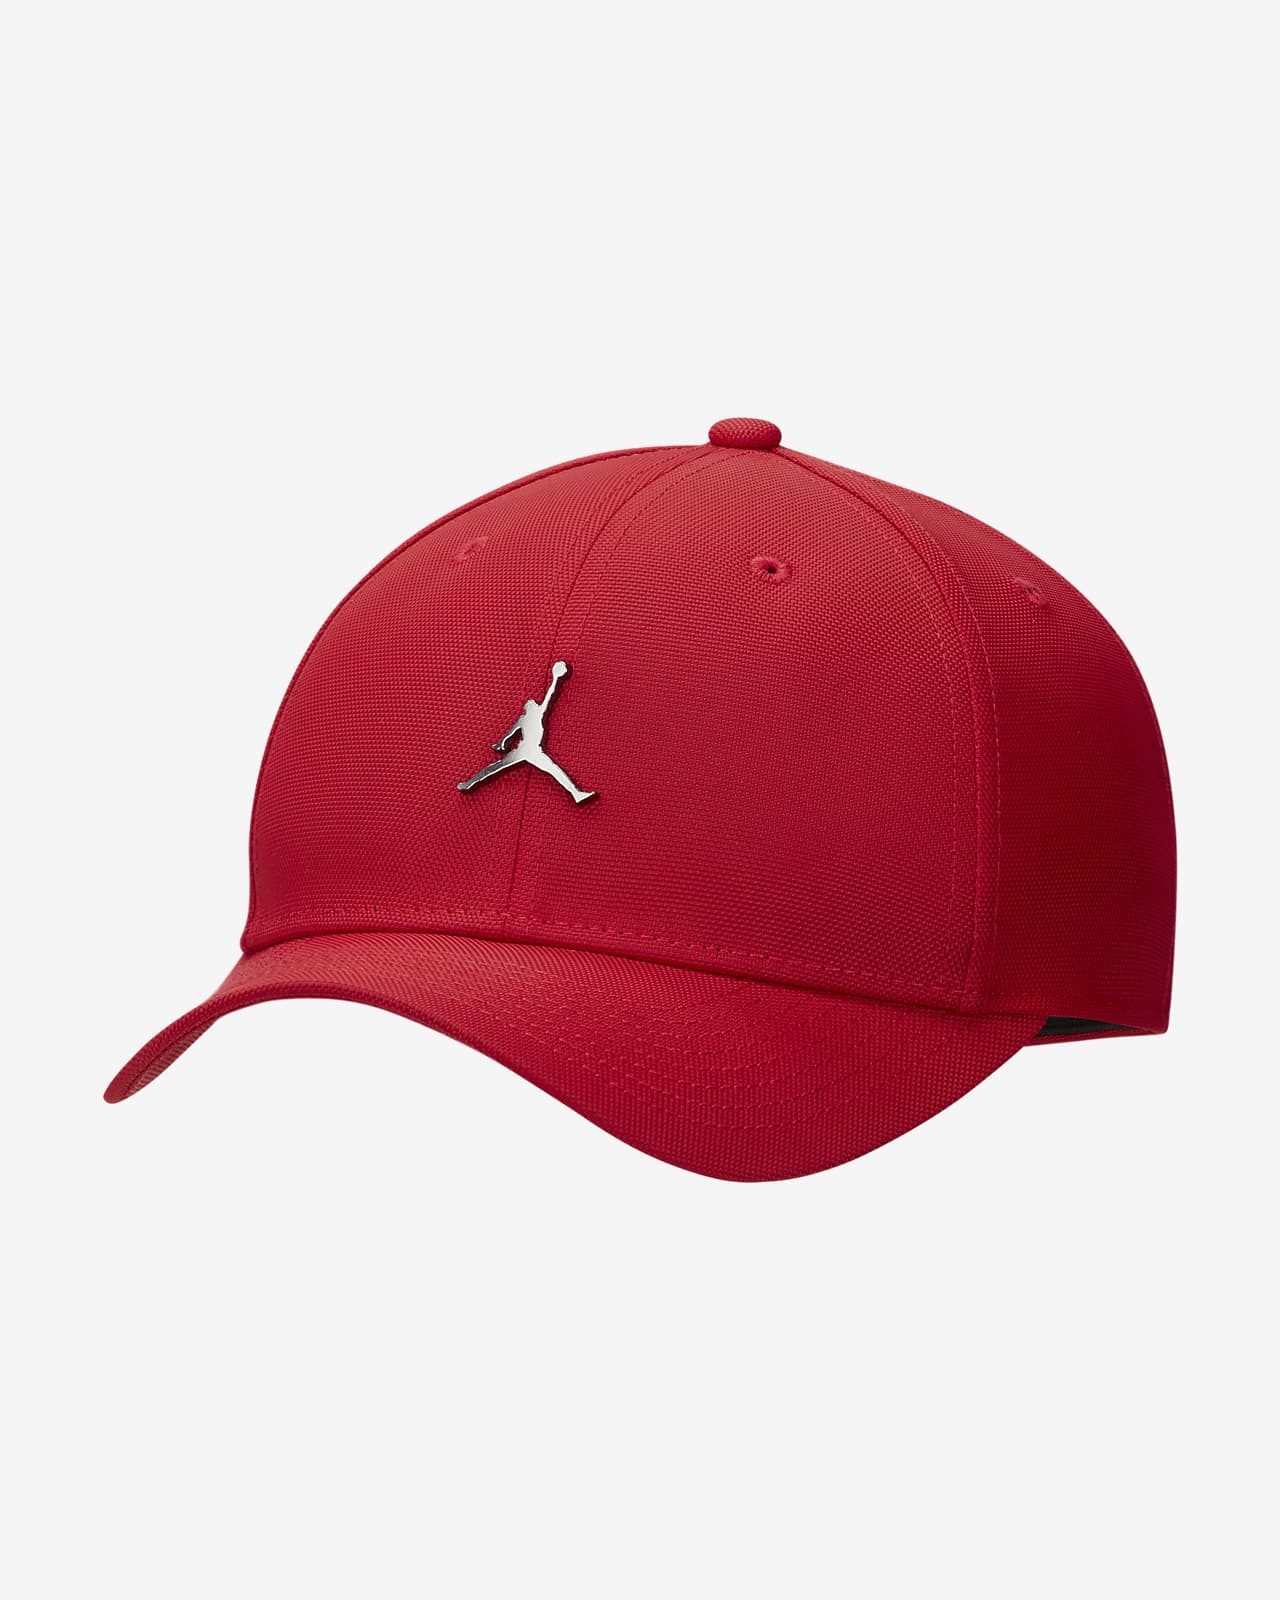 Jordan Rise Cap Adjustable Hat. Nike Vn